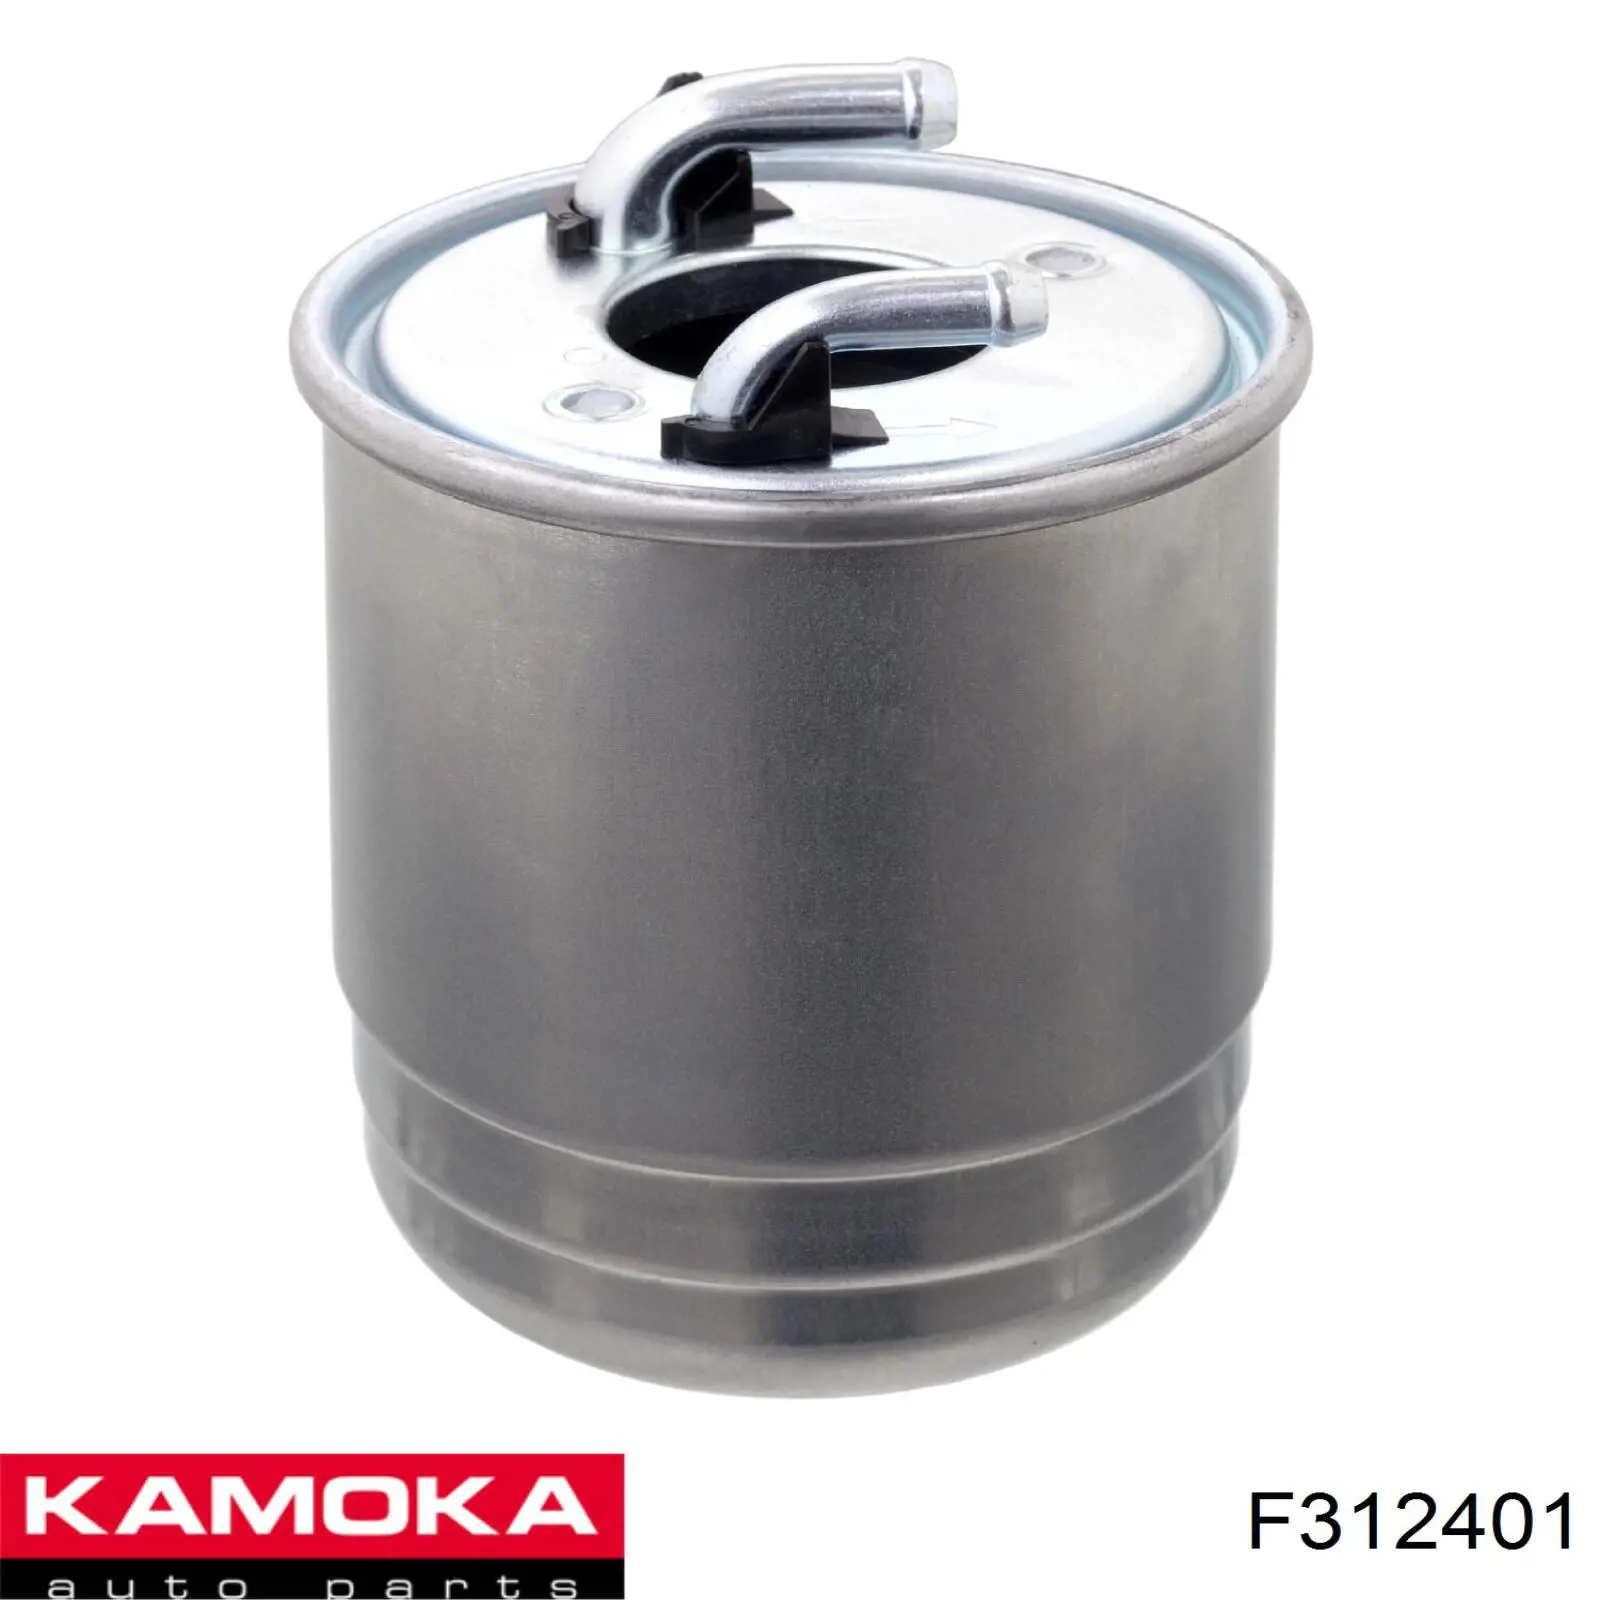 F312401 Kamoka filtro combustible